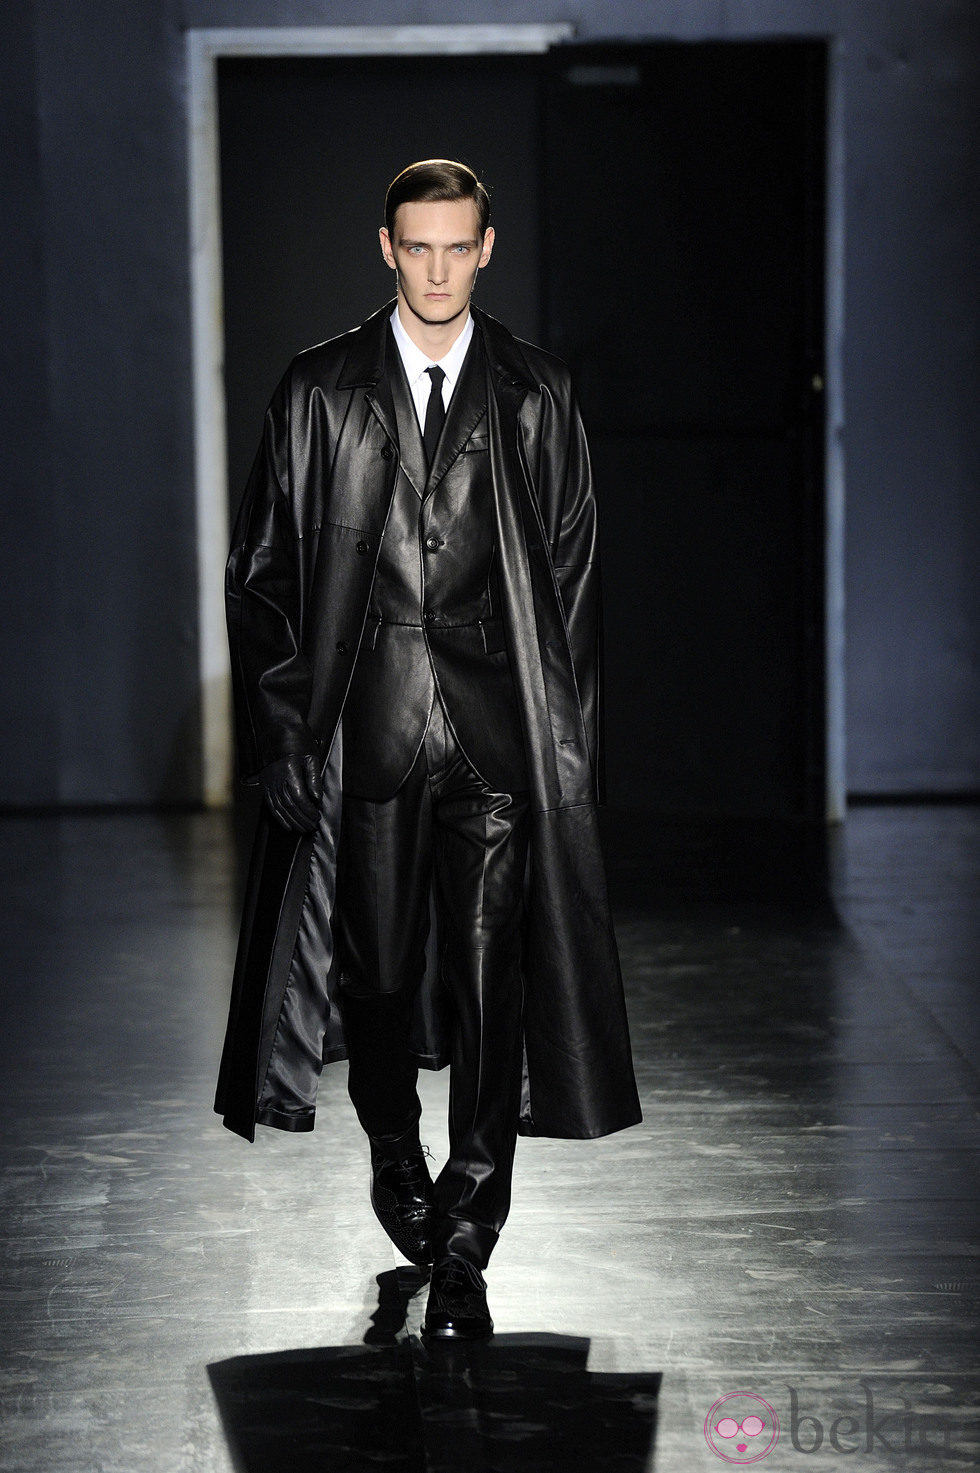 Semana de la moda masculina de Milán 2012: Jil Sander